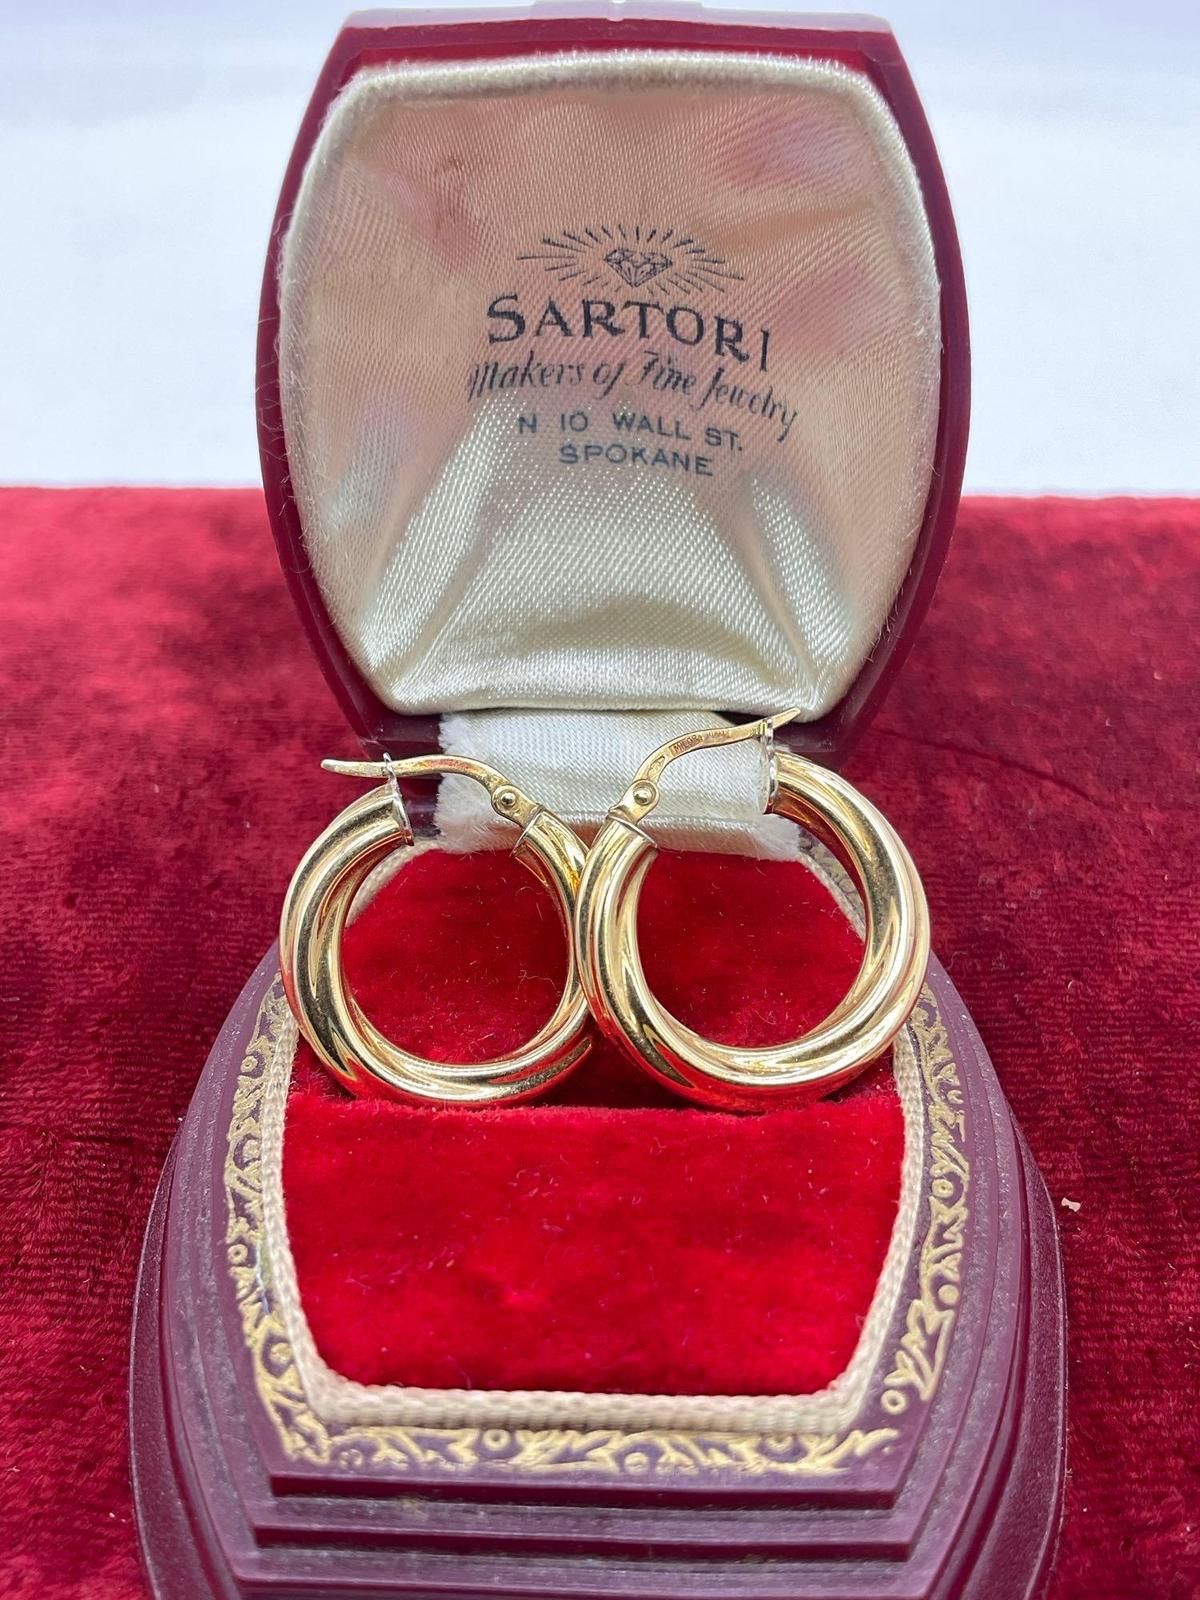 Pair of 18k yellow gold swirled hoop design earrings - classic shape, milor italy - 2.18 grams